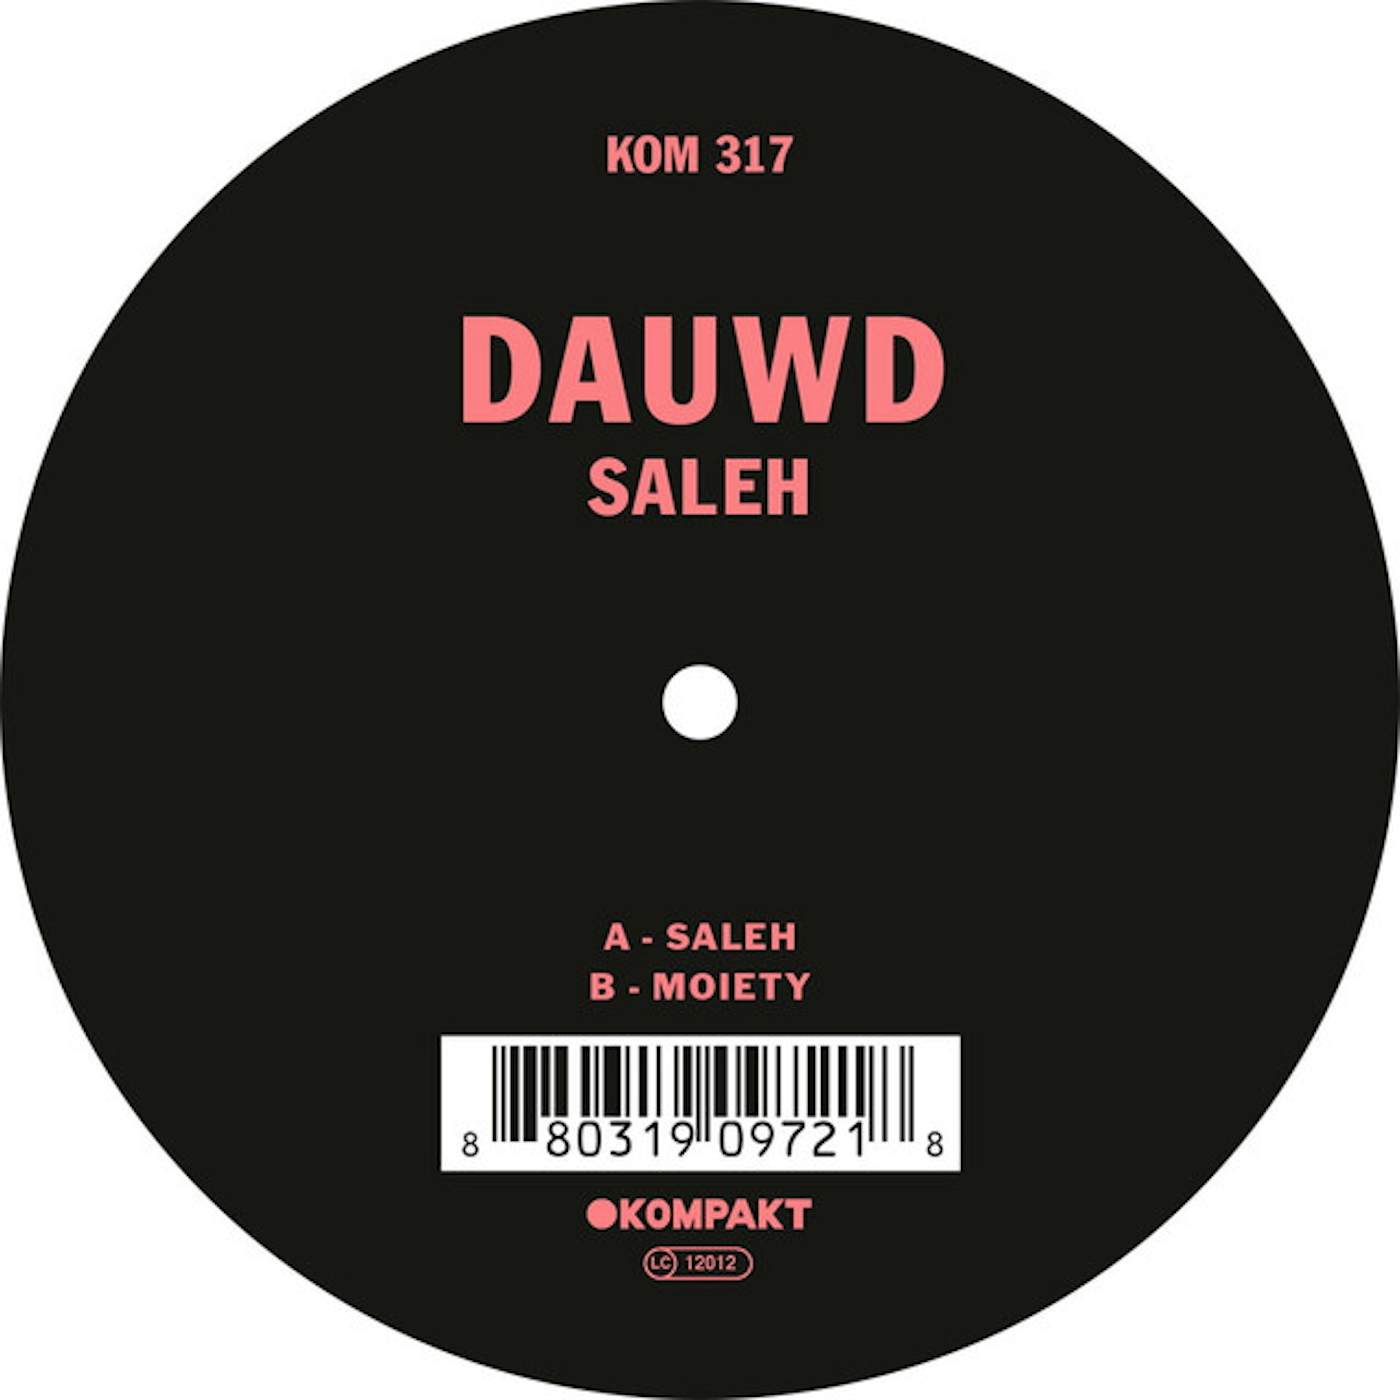 Dauwd Saleh Vinyl Record